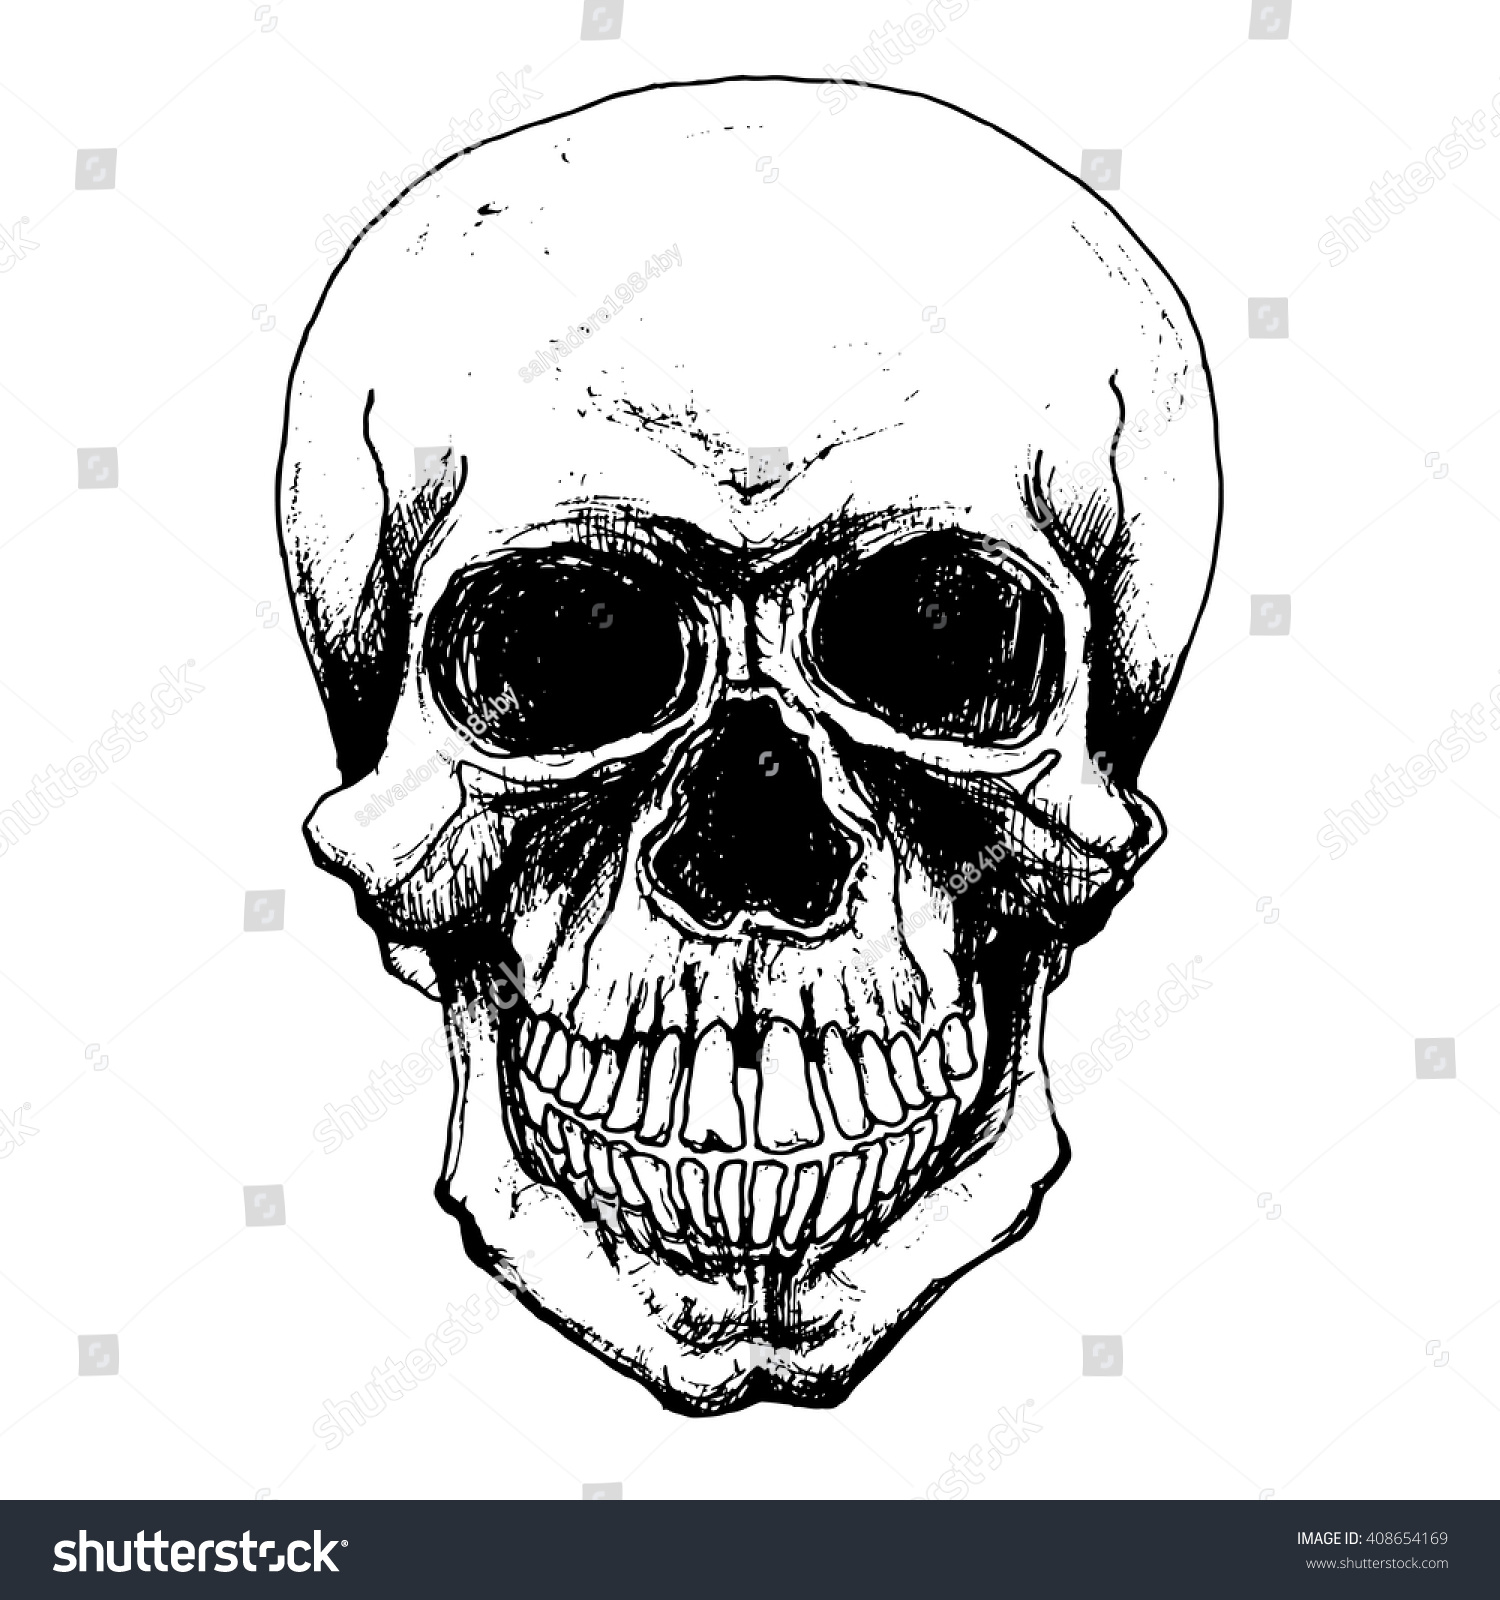 Skull Isolated On White Background Stock Vector Illustration 408654169